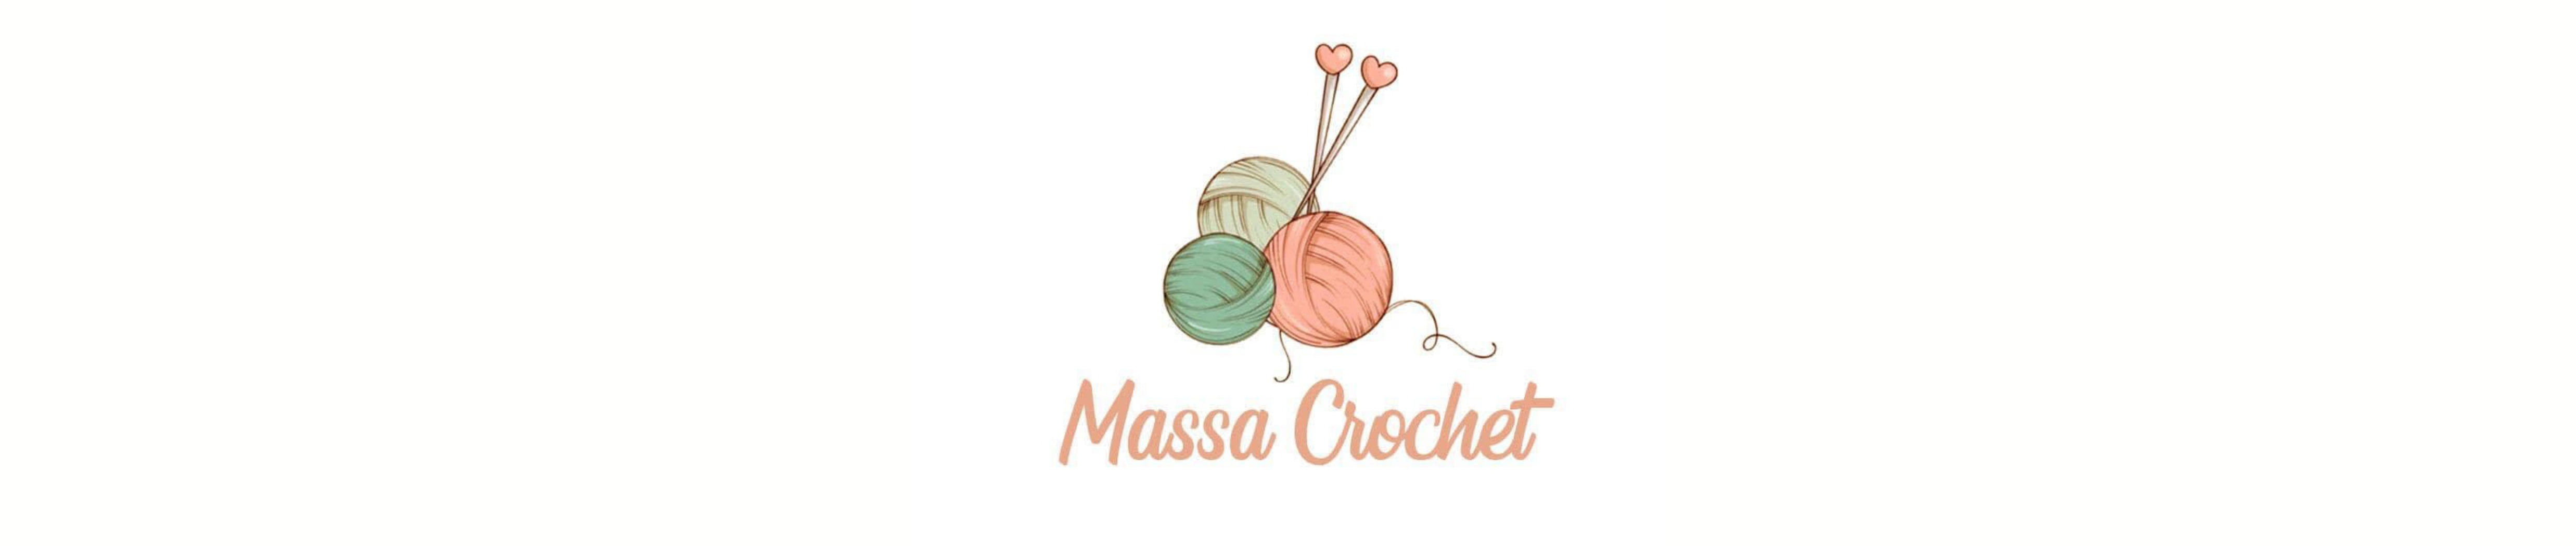 Massa Crochet